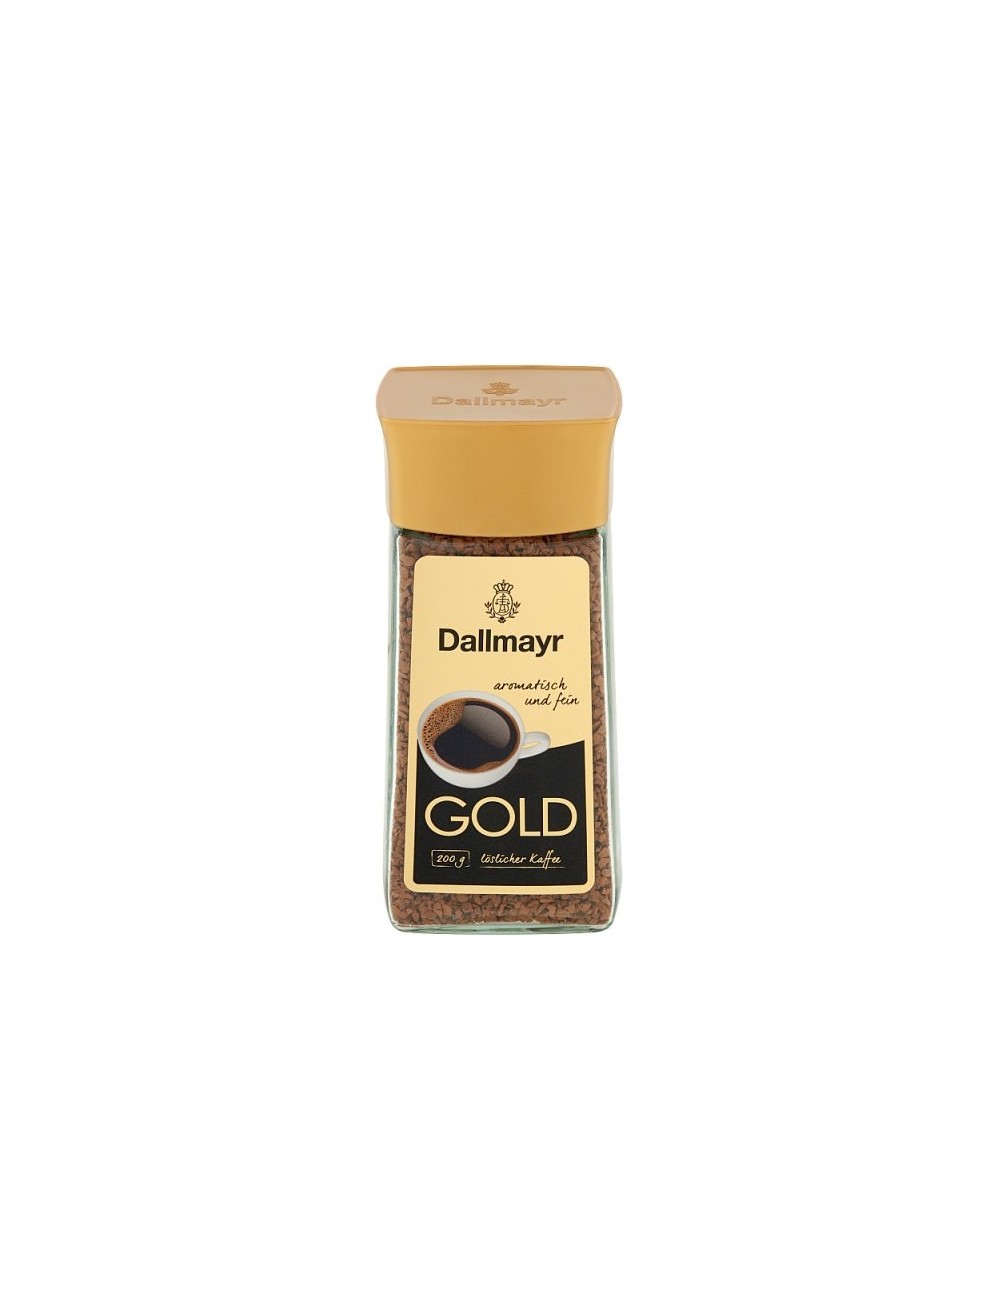 Dallmayr Gold Niemiecka Kawa Rozpuszczalna w Słoiku 200 g